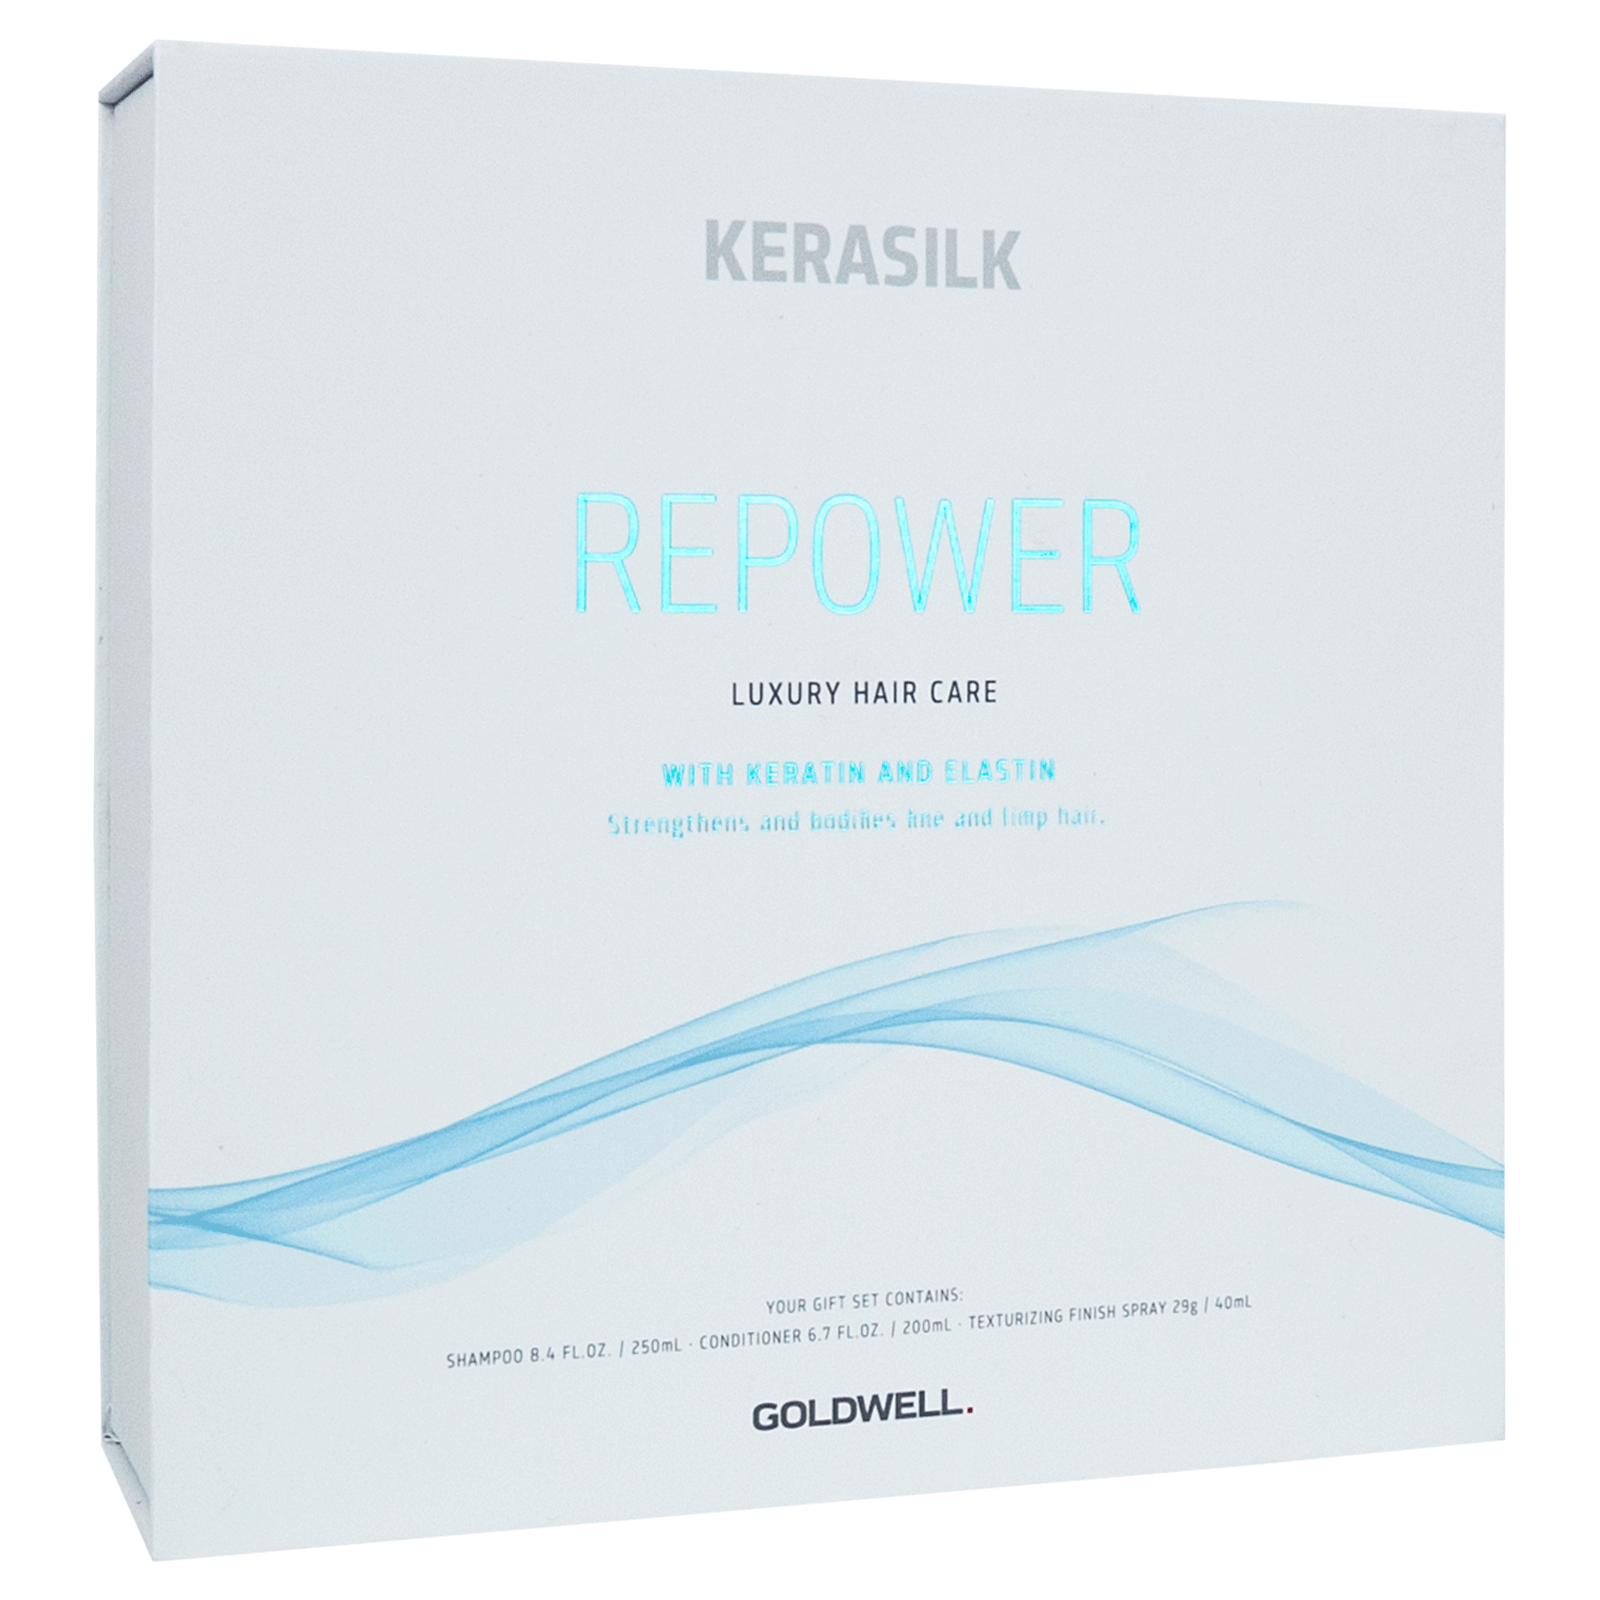 KeraSilk Repower Shampoo, Conditioner, Finishing Spray